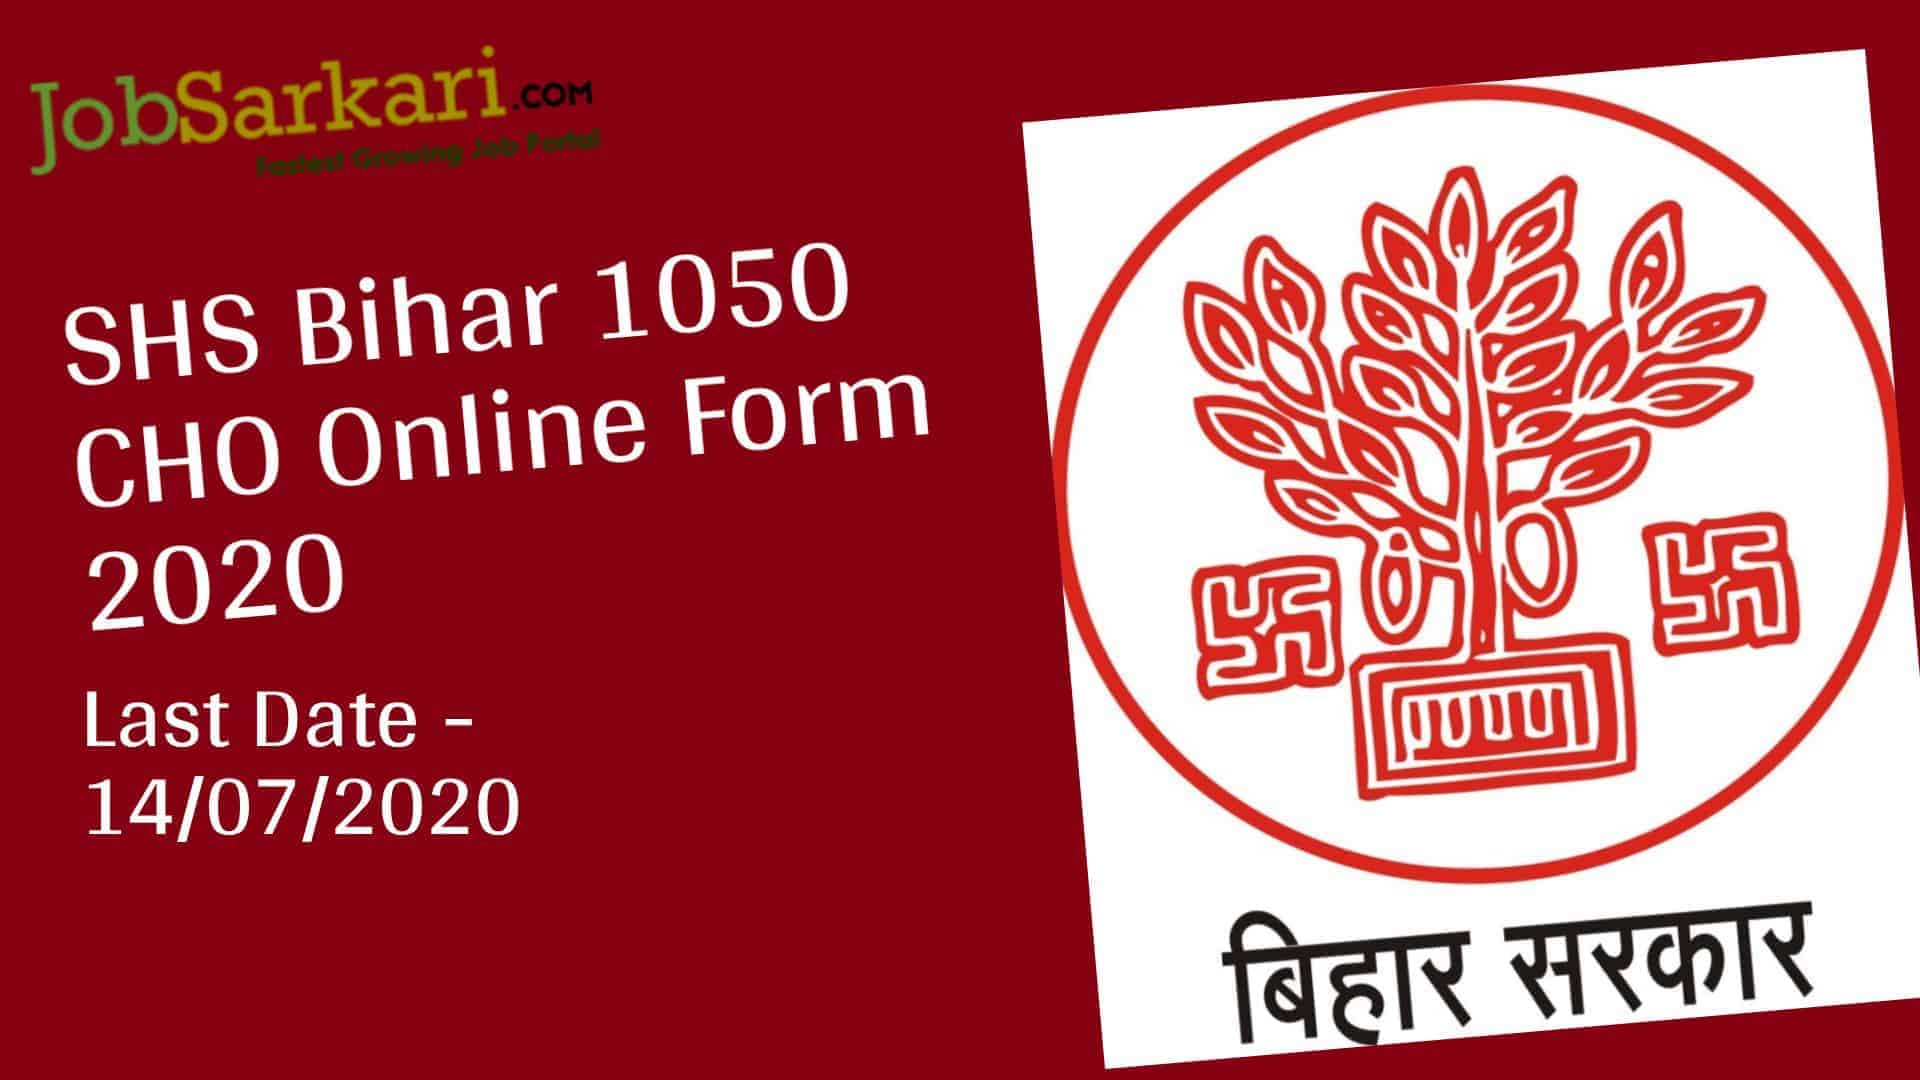 SHS Bihar 1050 CHO Online Form 2020